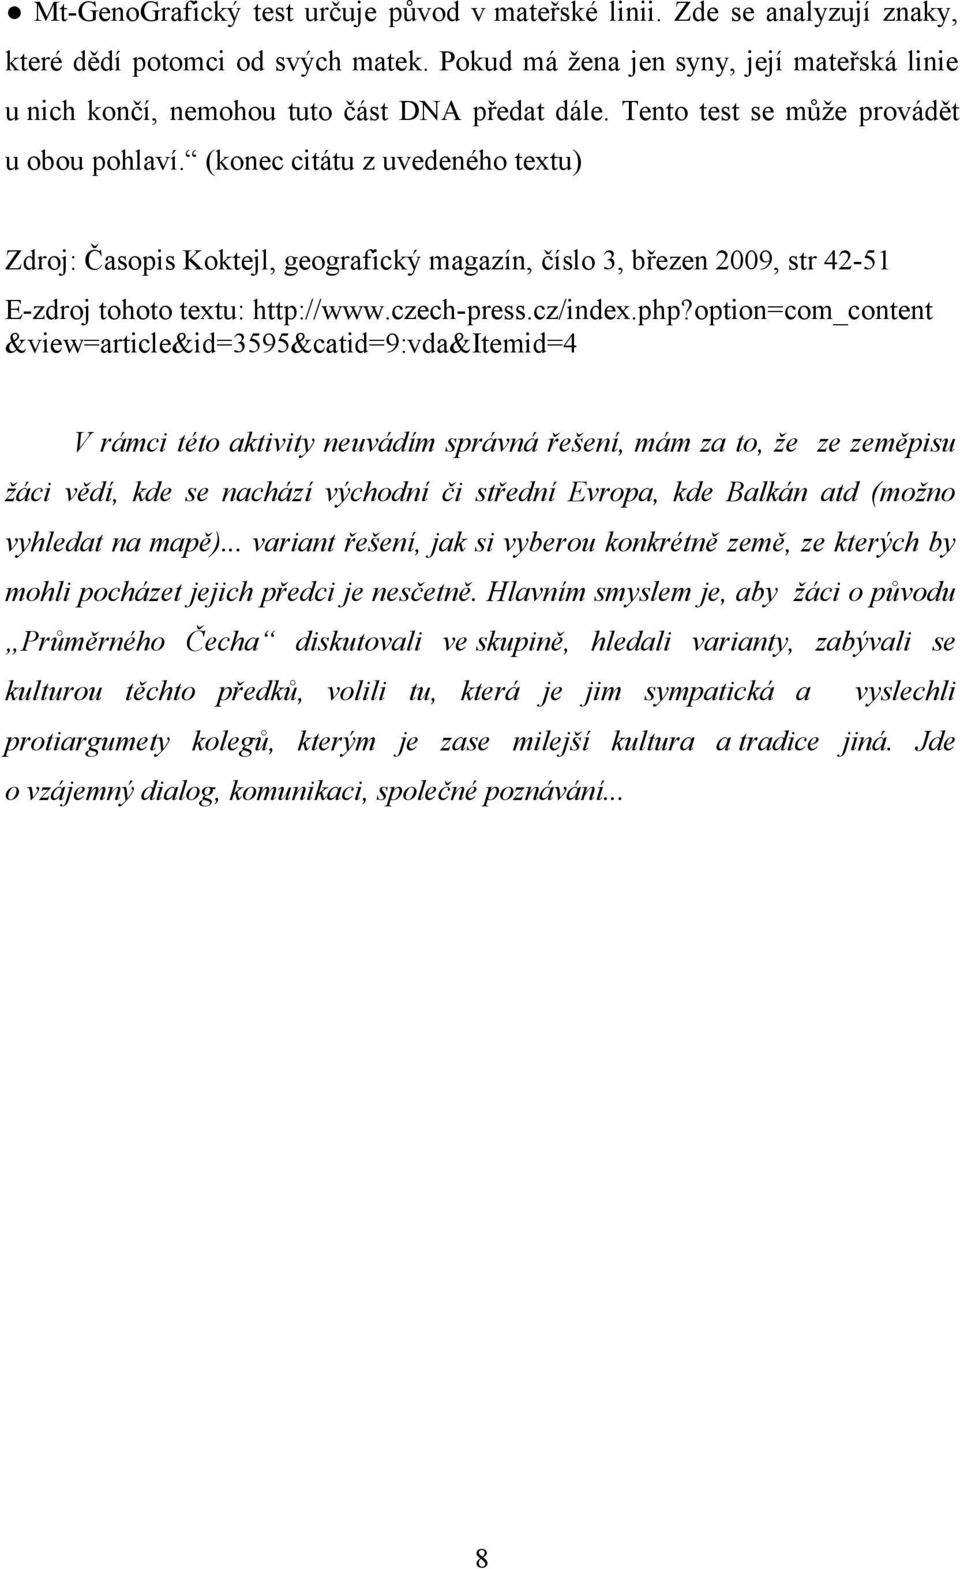 (konec citátu z uvedeného textu) Zdroj: Časopis Koktejl, geografický magazín, číslo 3, březen 2009, str 42-51 E-zdroj tohoto textu: http://www.czech-press.cz/index.php?